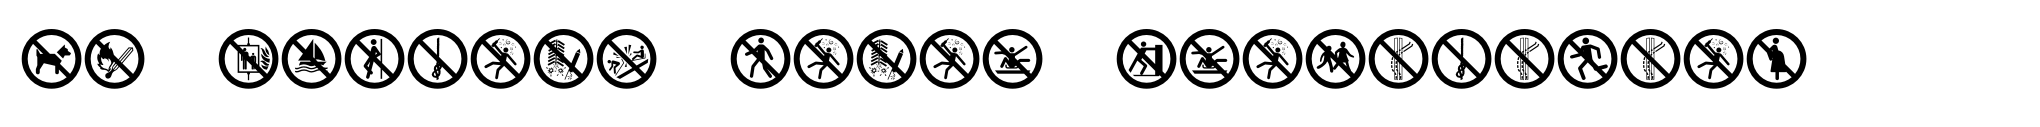 TB Symbols Color Prohibition image